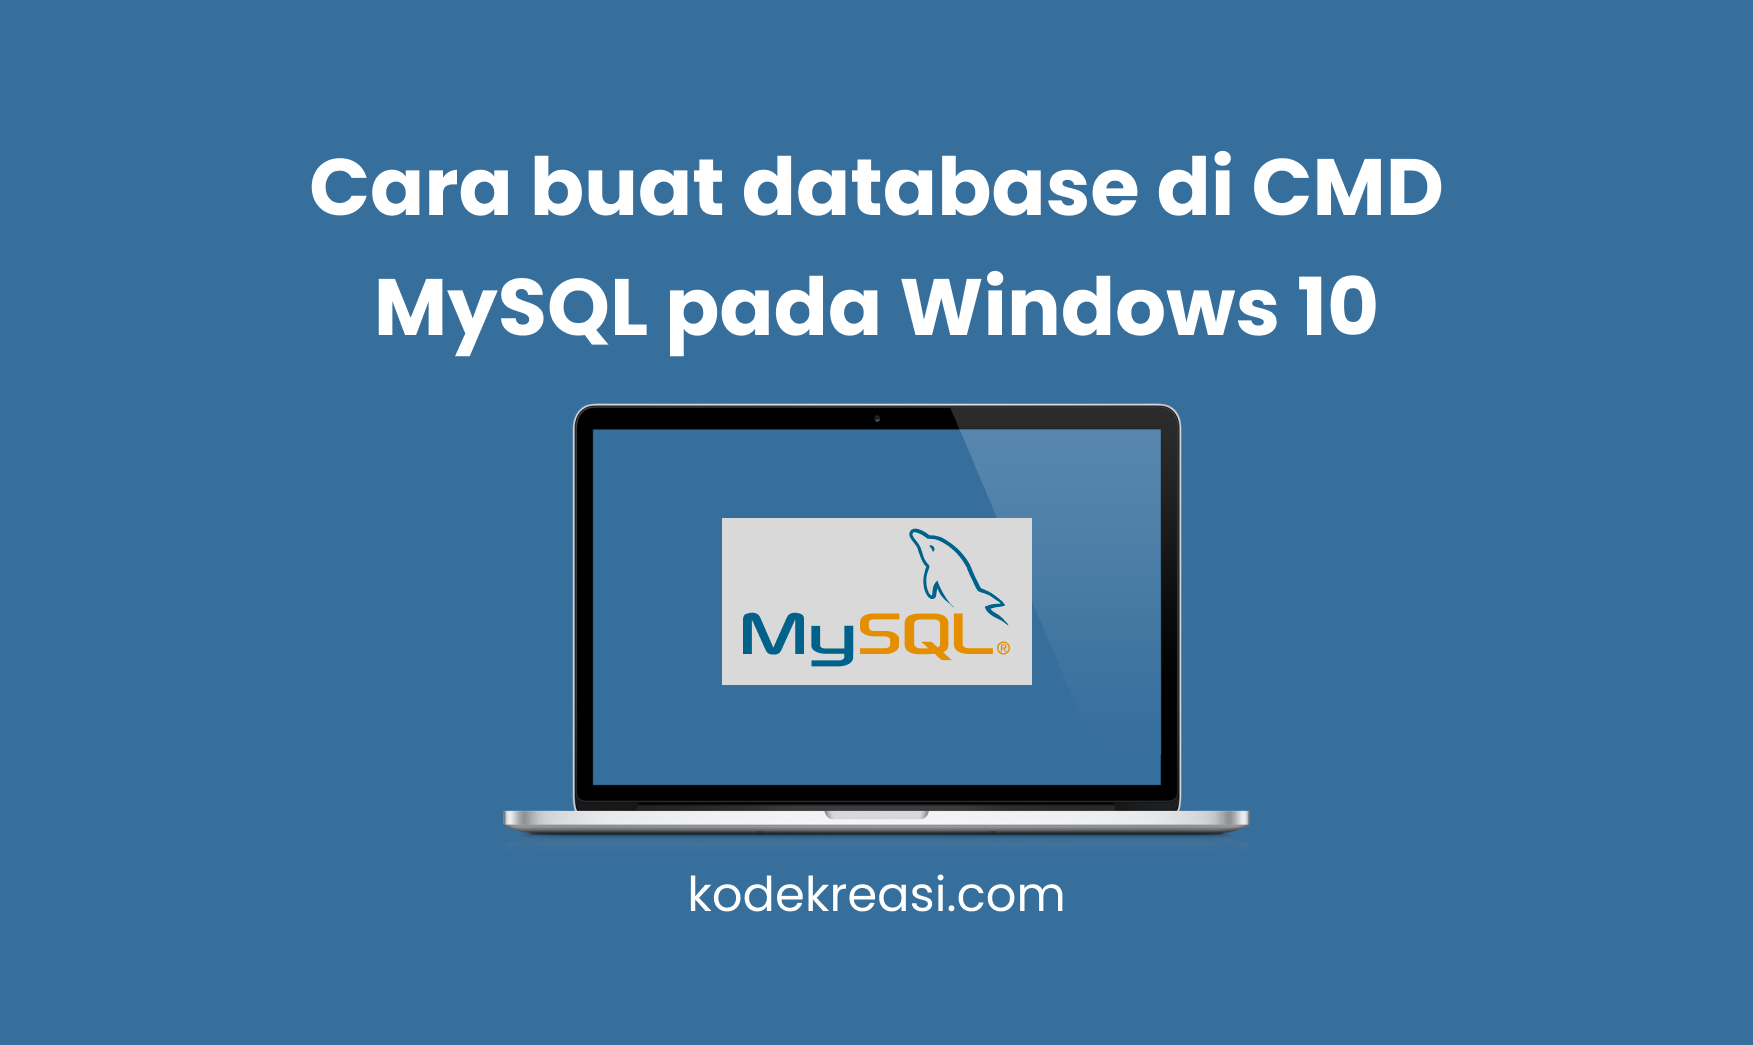 Cara buat database di CMD MySQL pada Windows 10